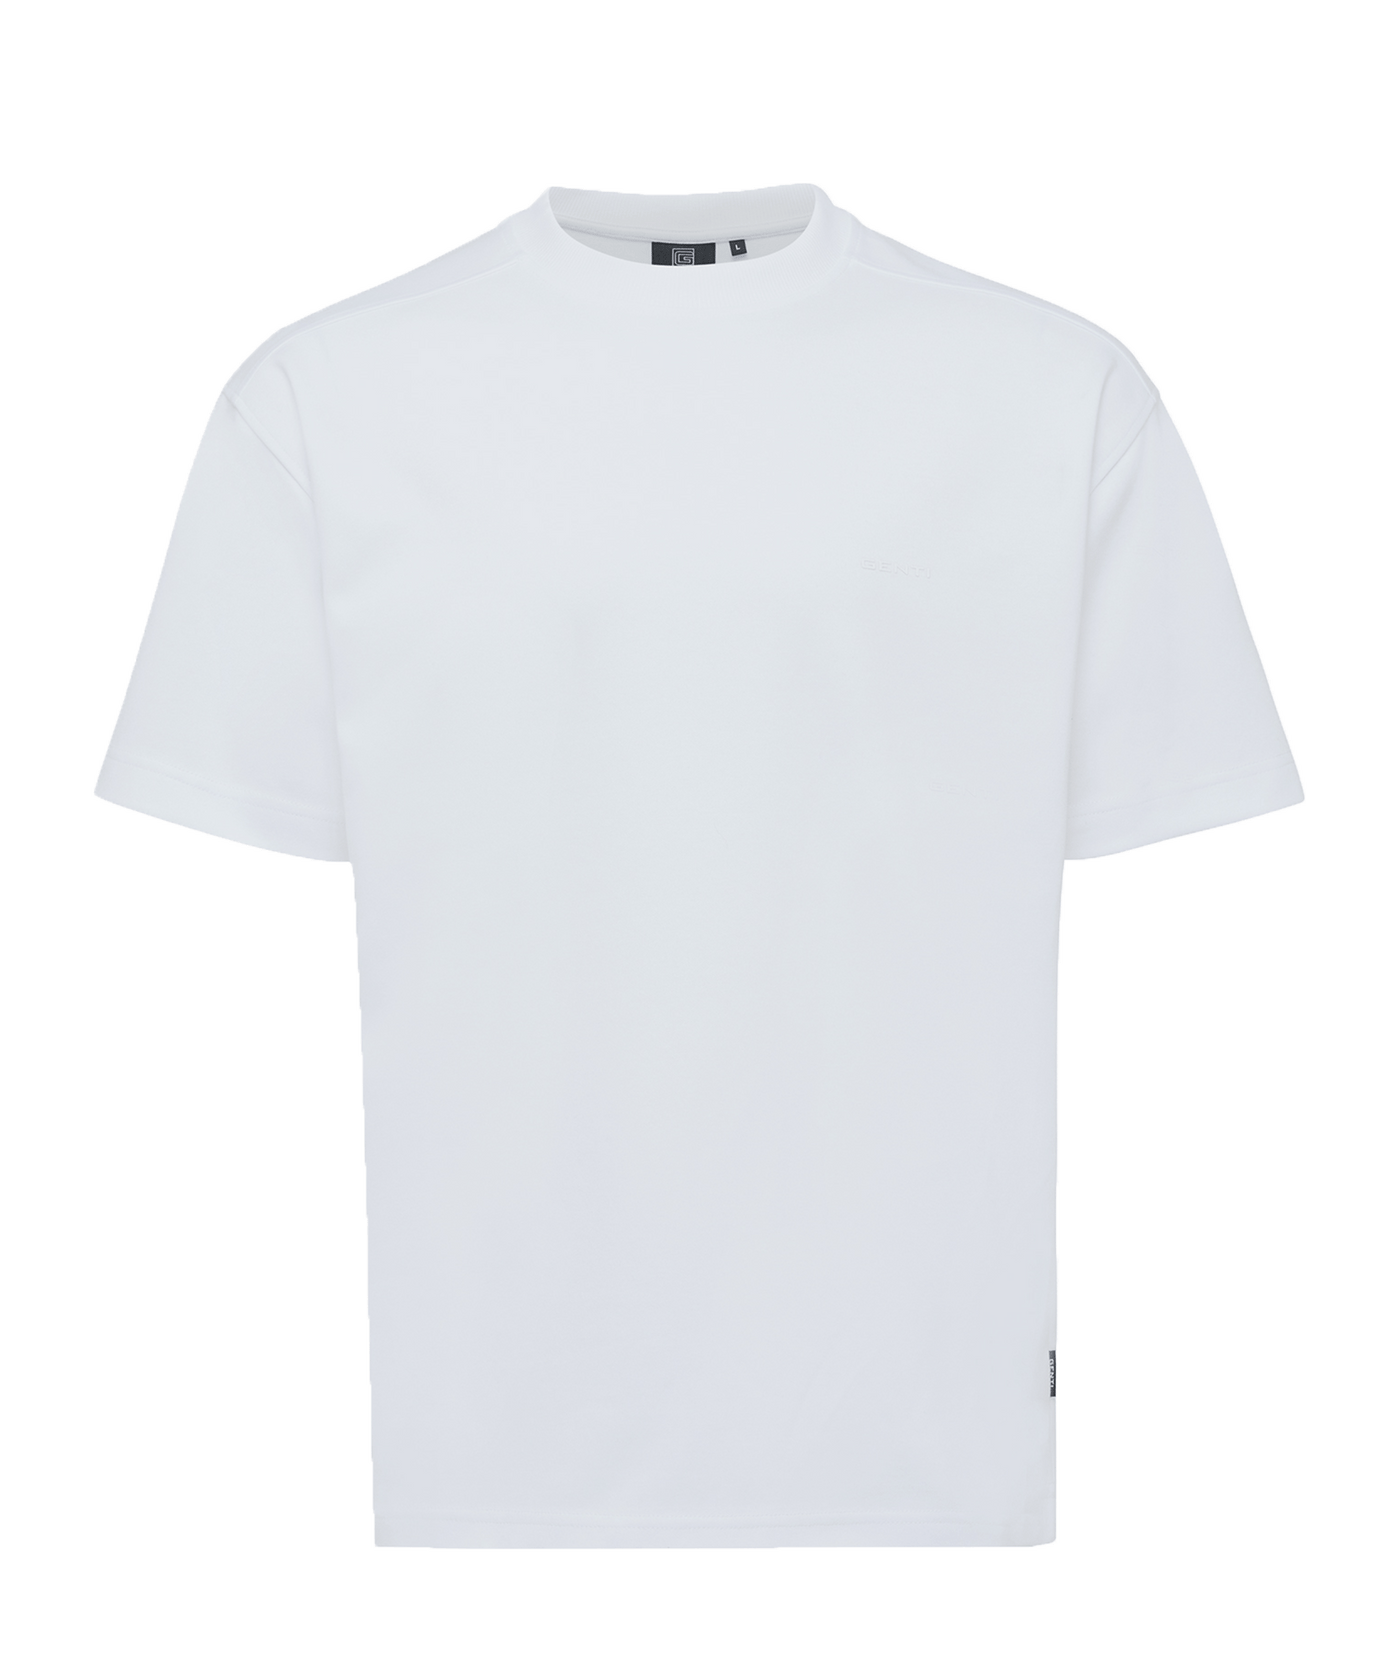 Genti - J9044-1227 - T-shirt Ss - 004 White